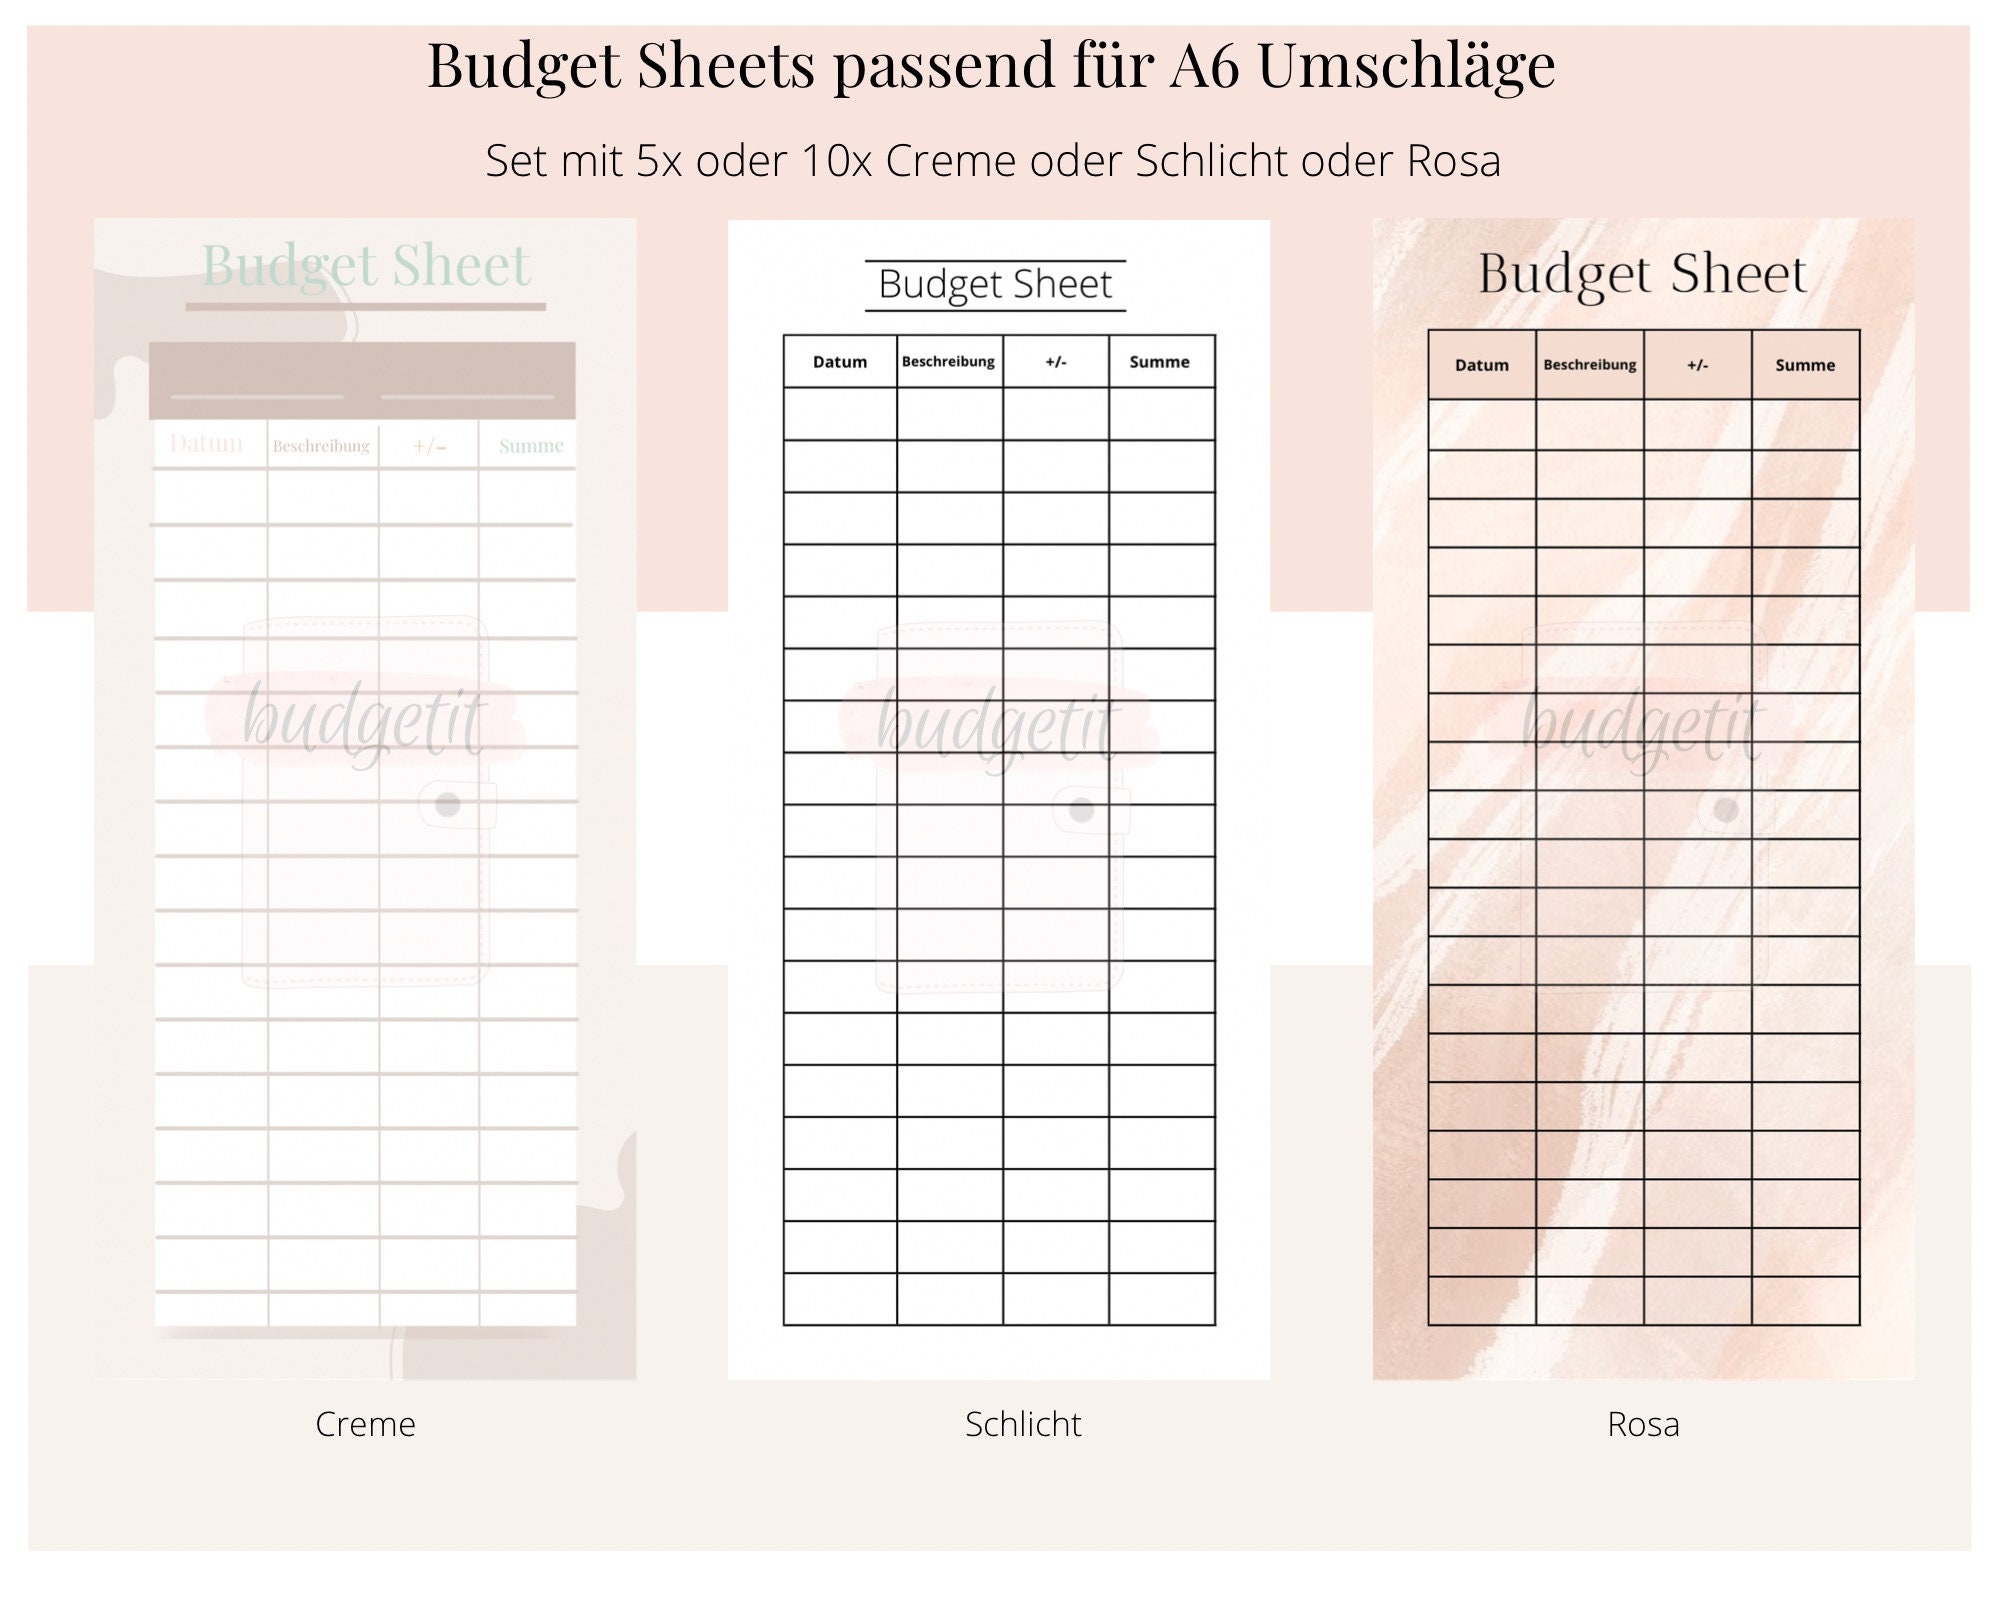 Budget Sheet / PRINTVERSION / Set of 5, 10 / A6 Budget Sheets